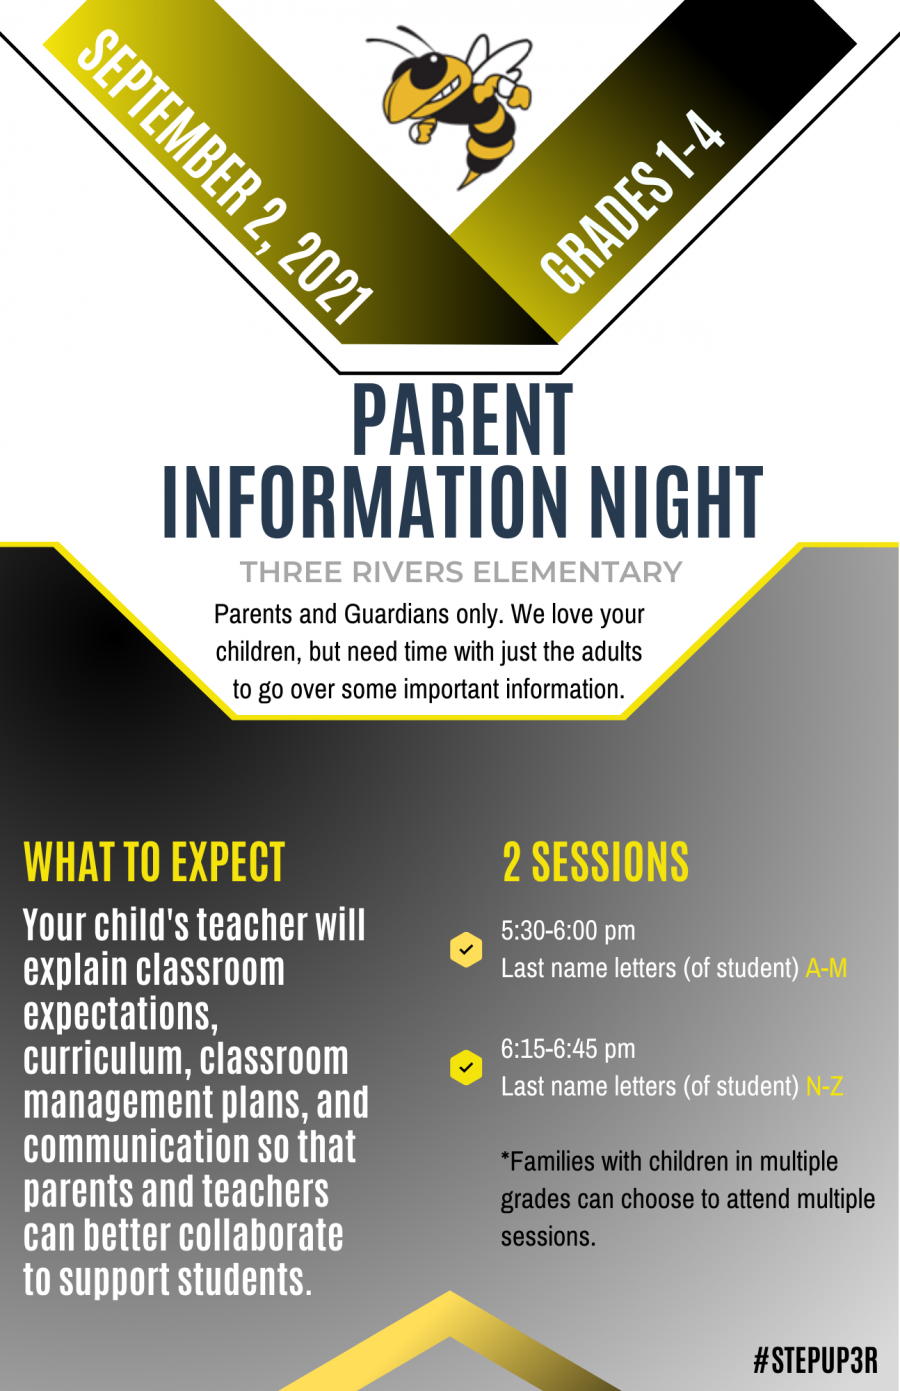 Parent Information Night flyer